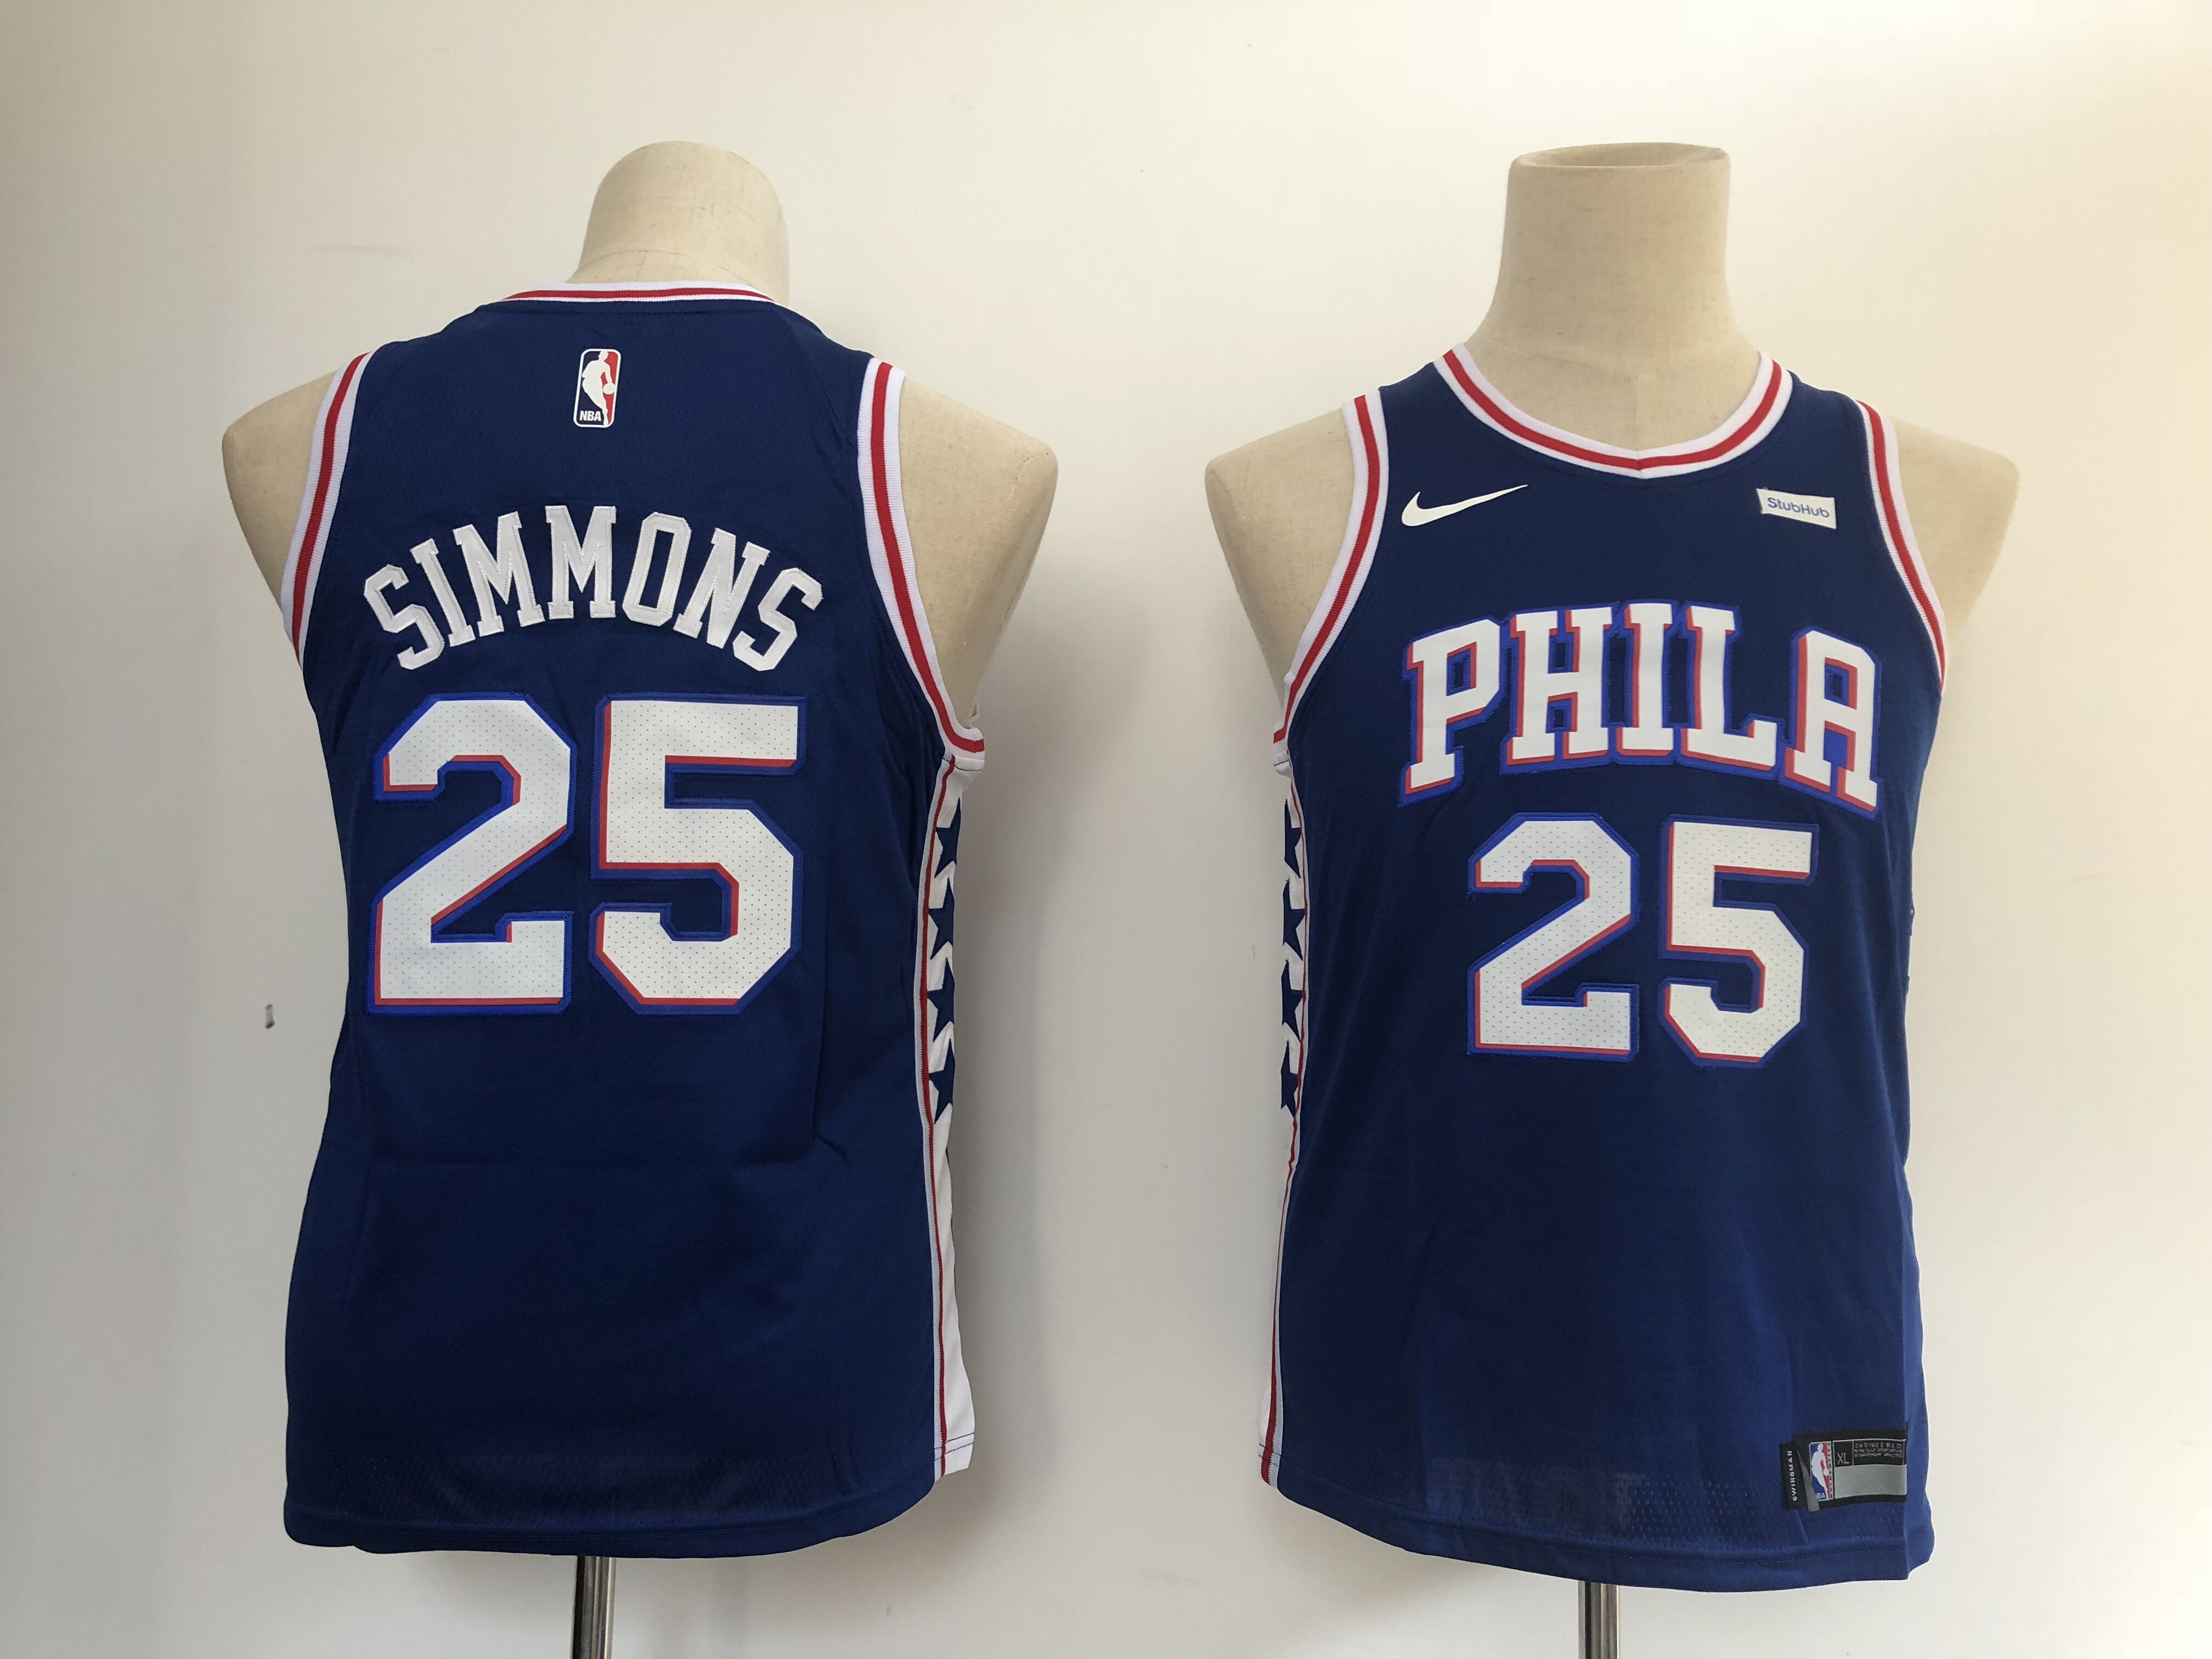 Youth Philadelphia 76ers #25 Simmons blue Nike NBA Jerseys